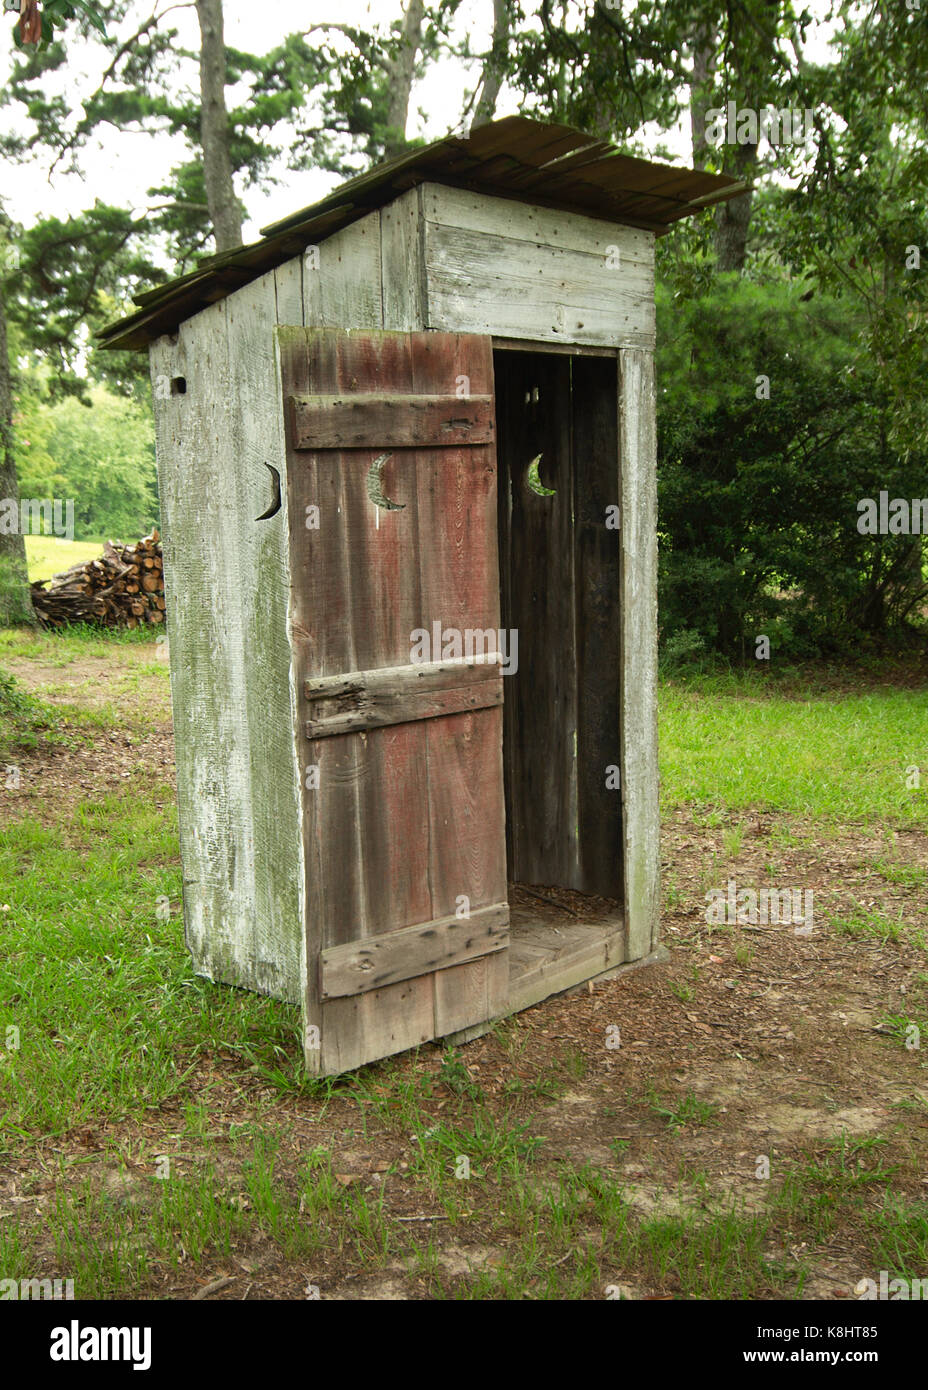 Baton Rouge, Louisiana, USA - 2016: A latrine at LSU Rural Life Museum, an outdoor museum of Louisiana history. Stock Photo